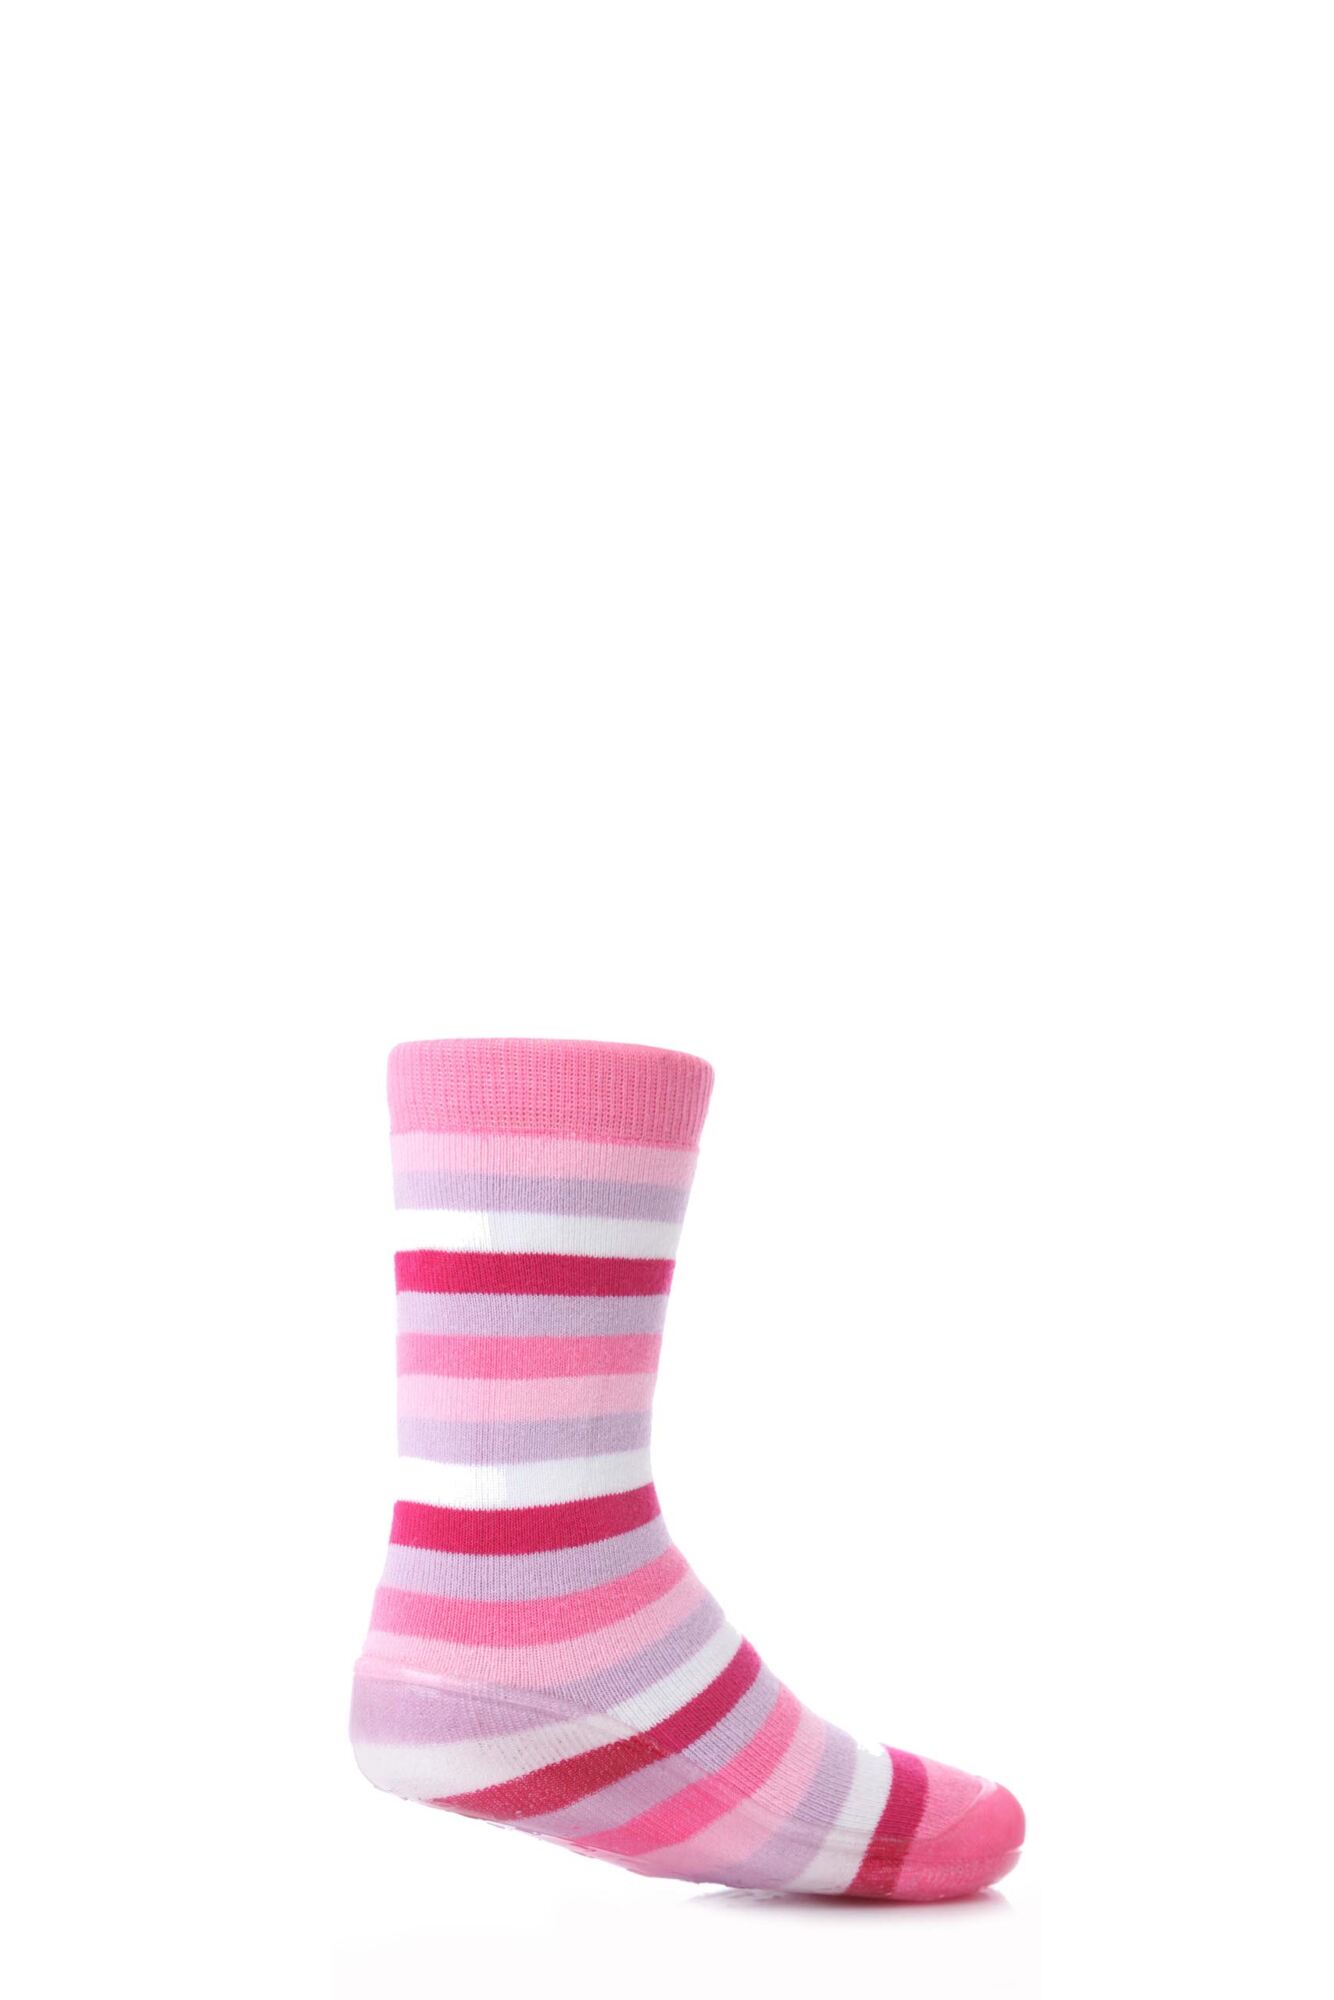 1 Pair Striped Gripper Slipper Socks 25% OFF This Style Girls - SOCKSHOP